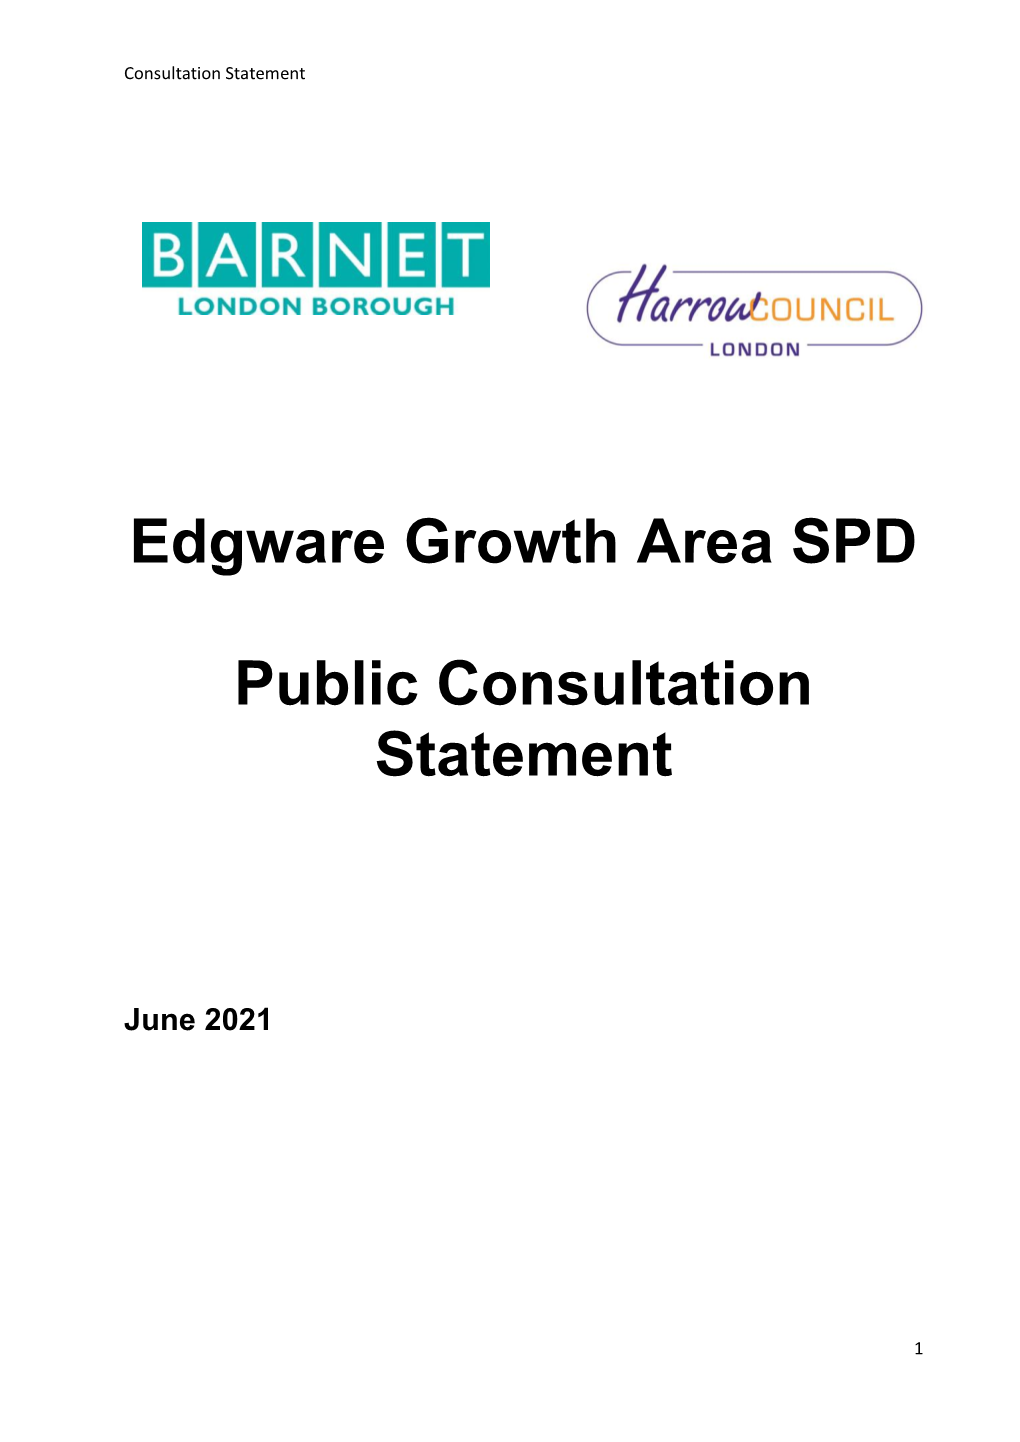 Edgware Growth Area SPD Public Consultation Statement